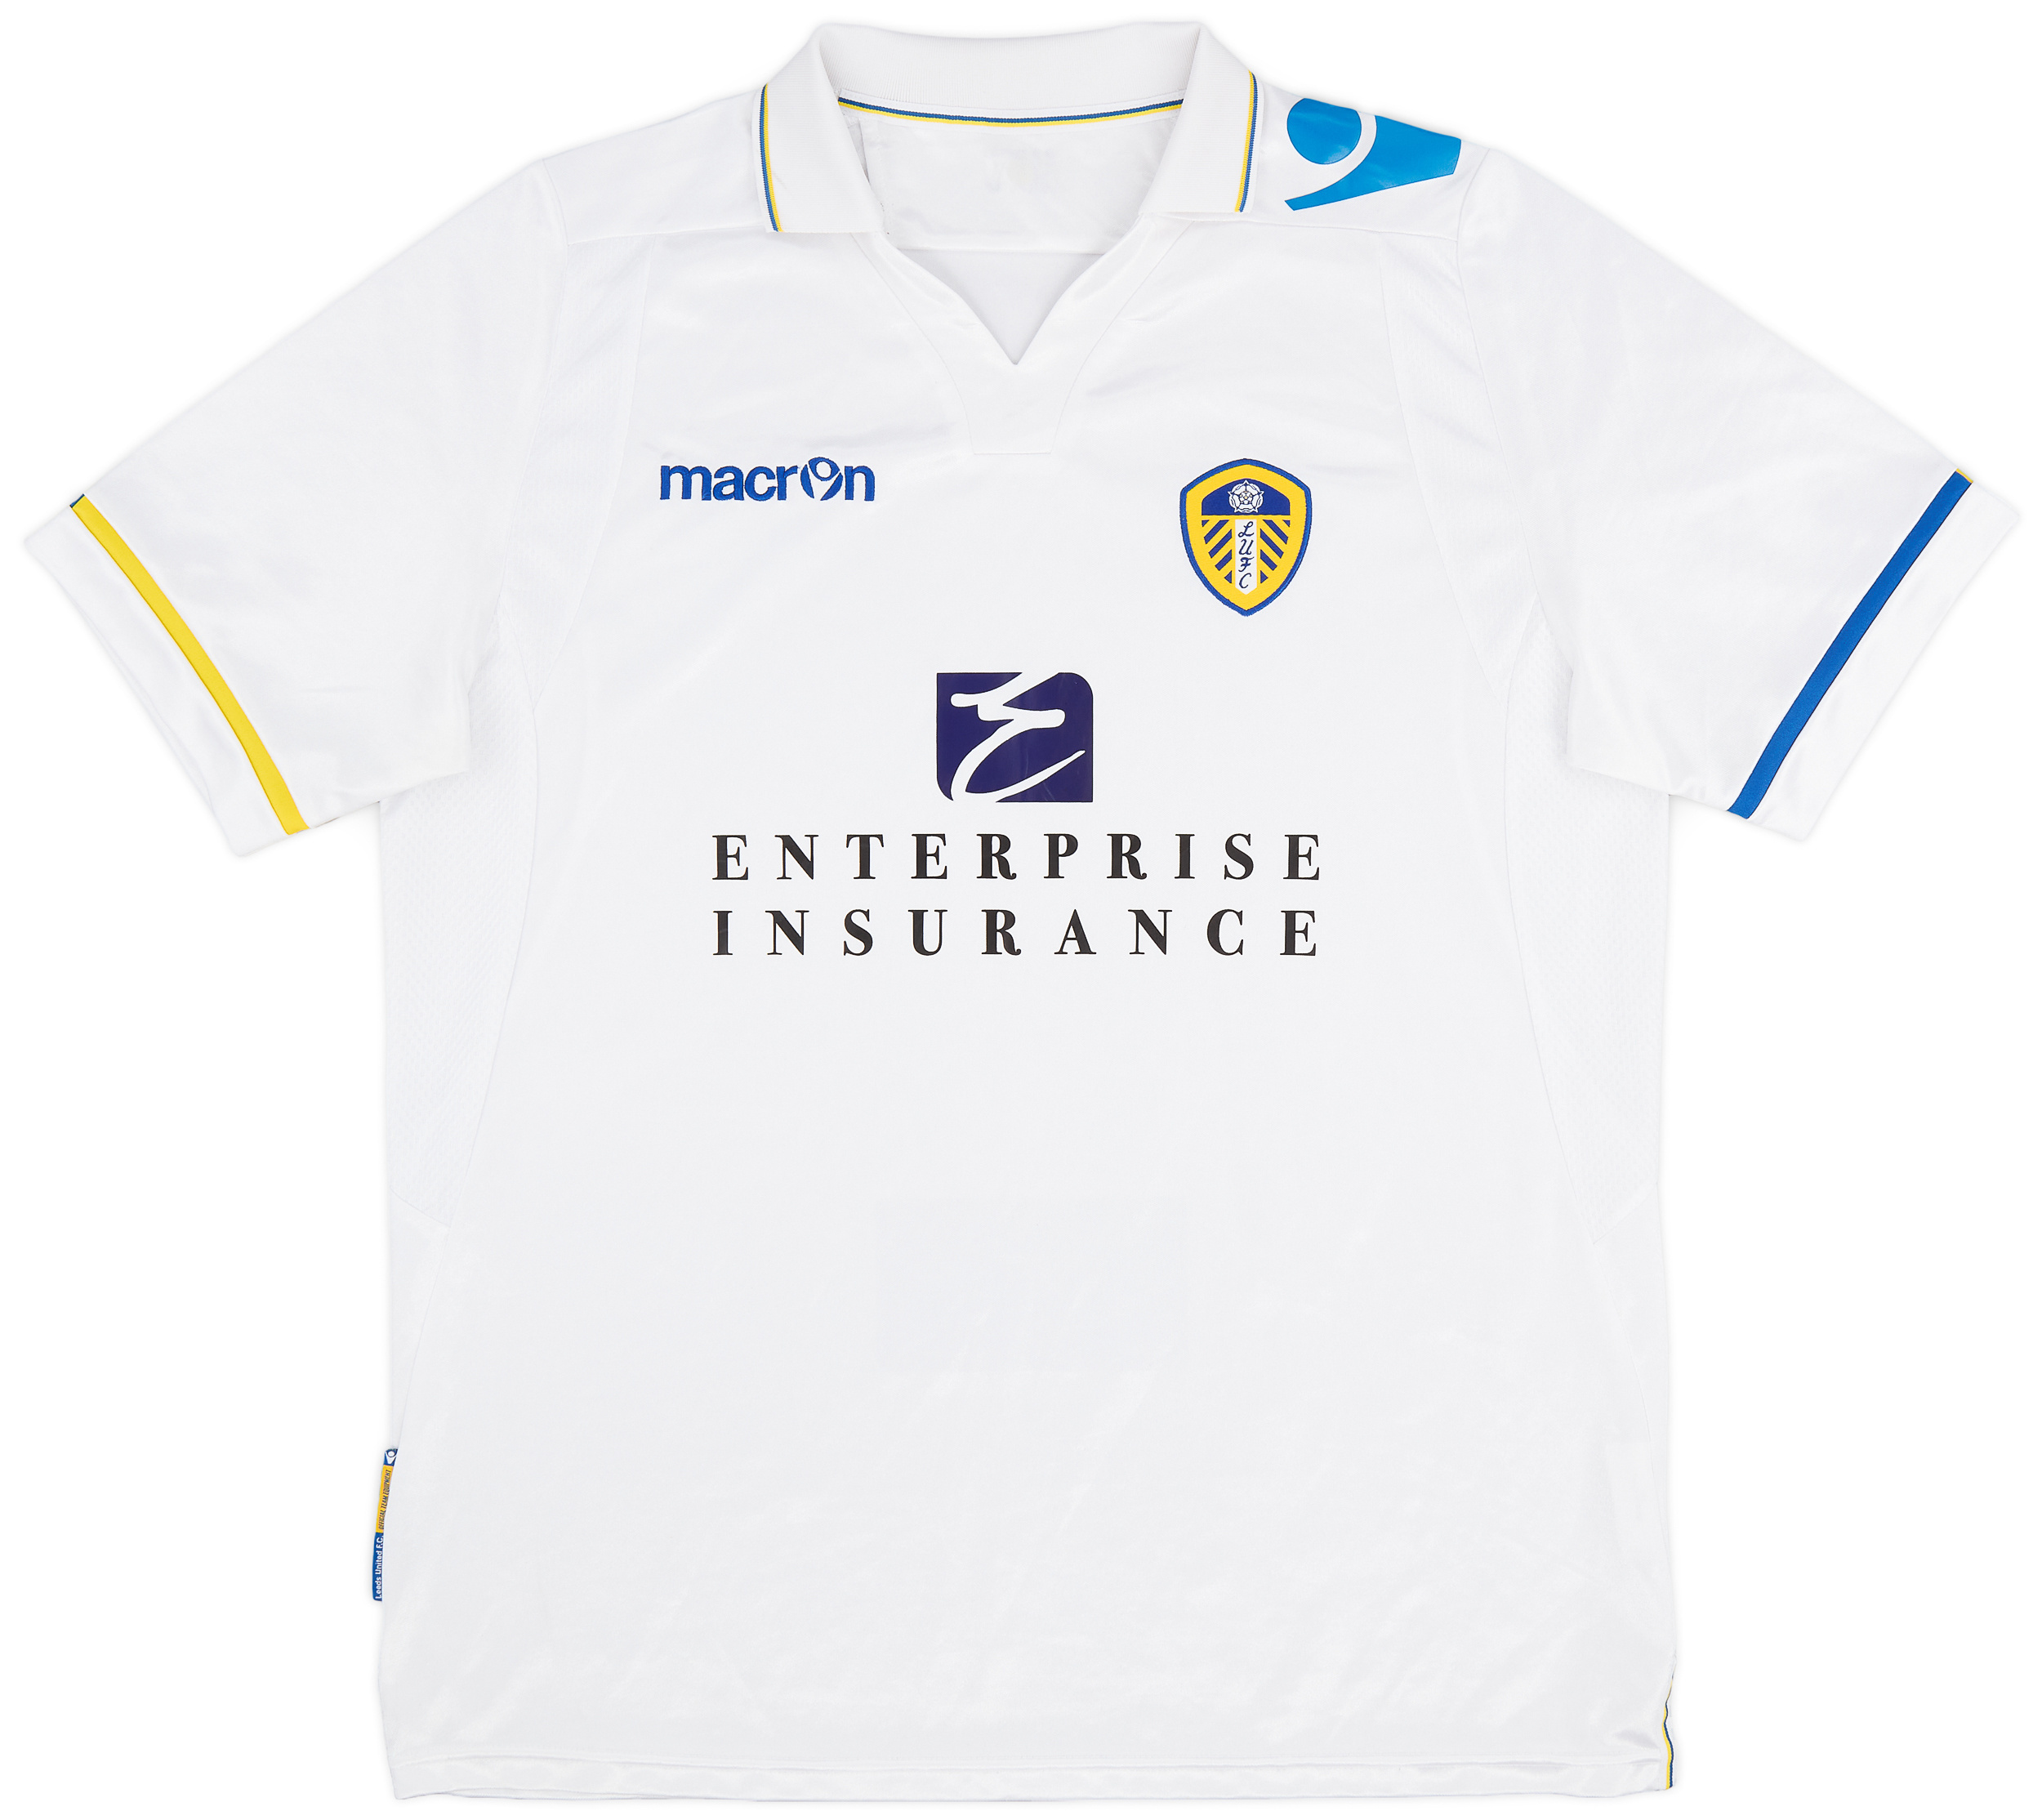 2011-12 Leeds United Home Shirt - 9/10 - ()